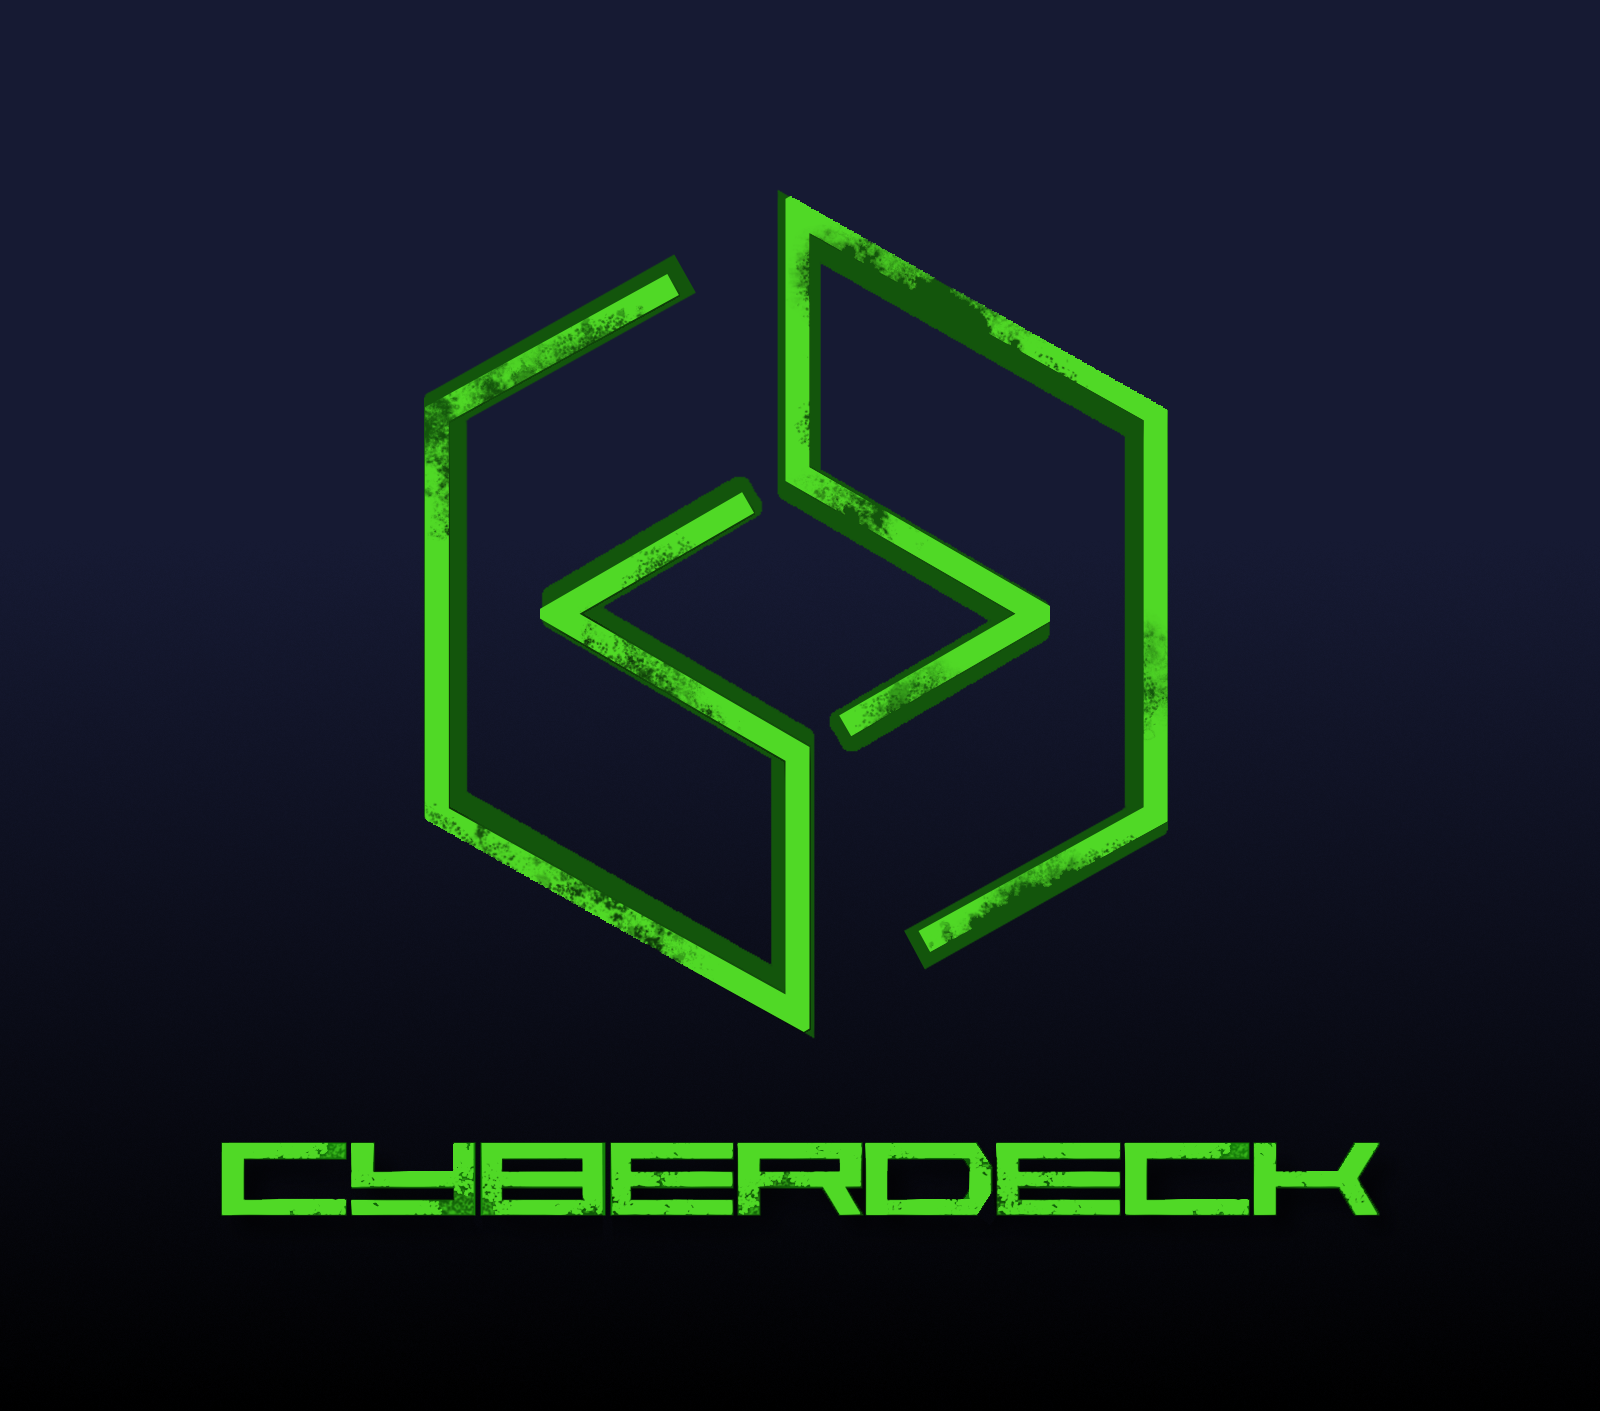 Cyberdeck